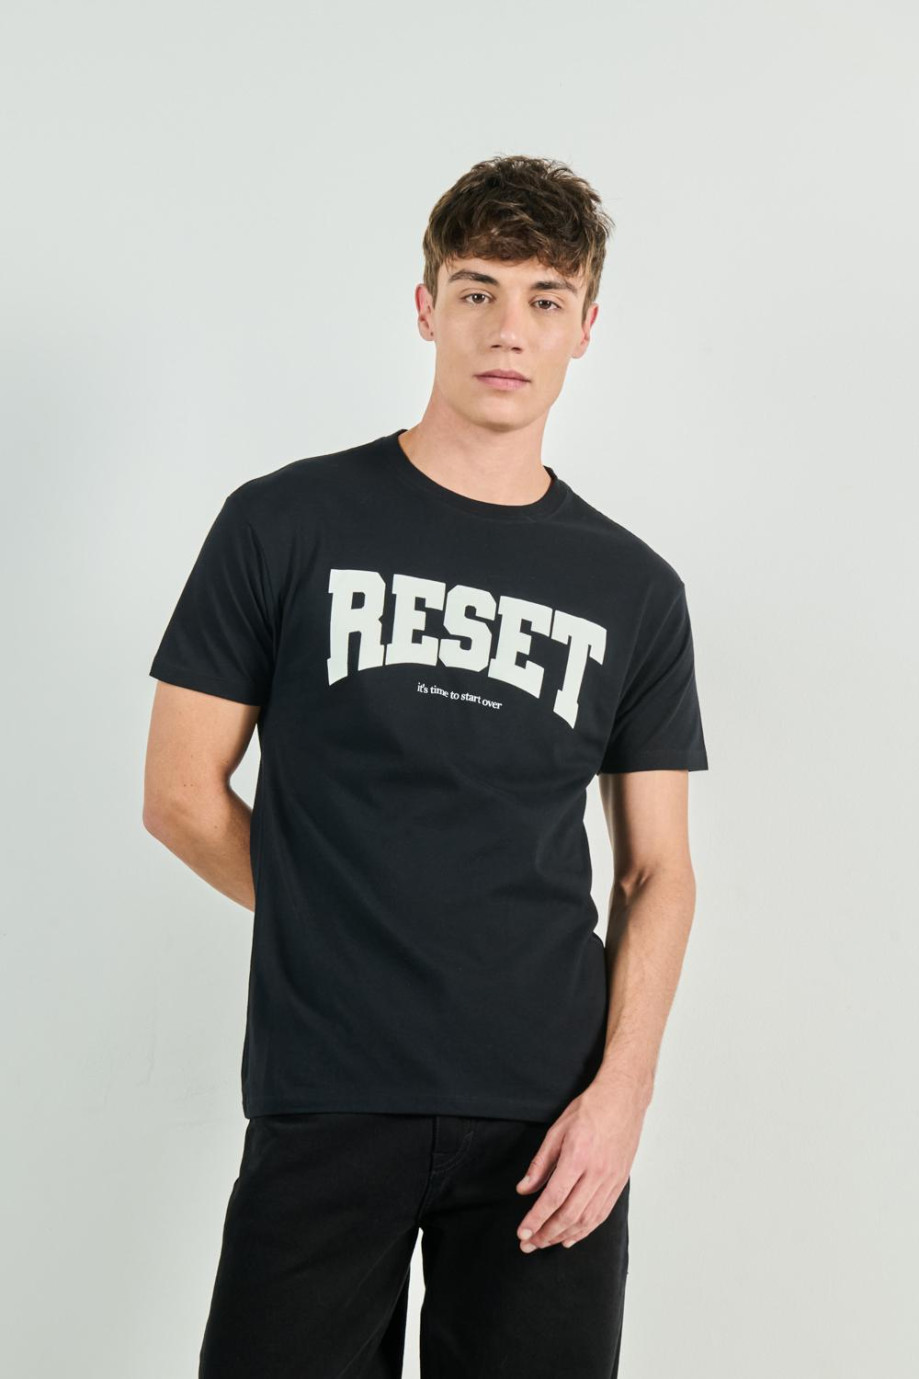 Camiseta negra manga corta con texto blanco estampado